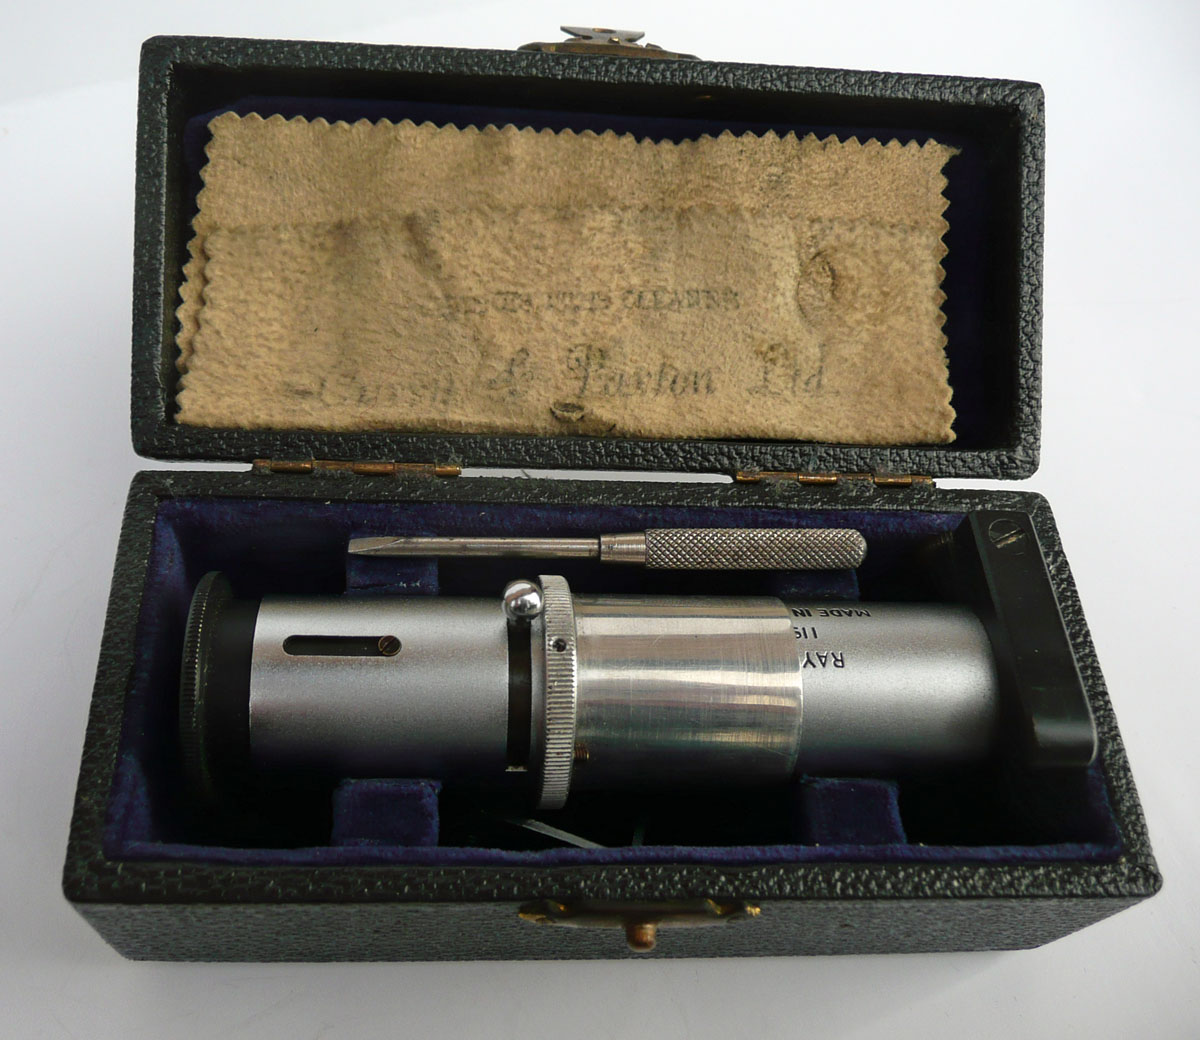 Hand spectroscope - Rayner multi-slit prism spectroscope - Gemmological Instruments Ltd